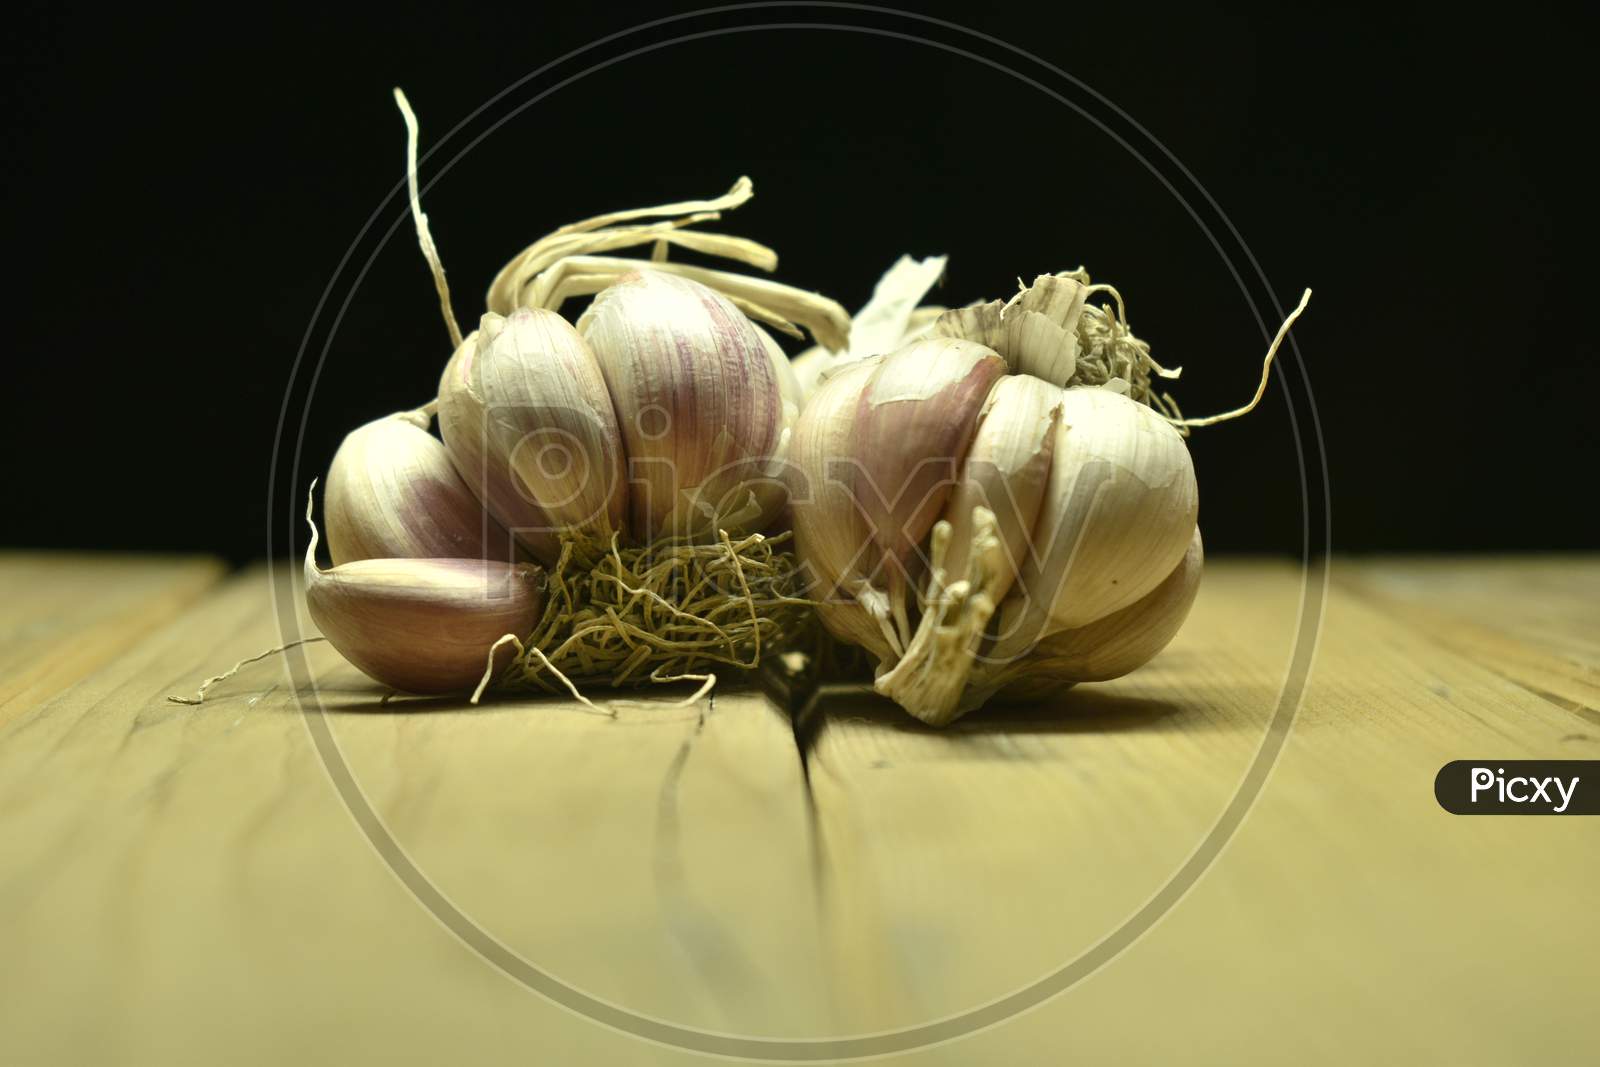 Garlic For Sale In A Market.